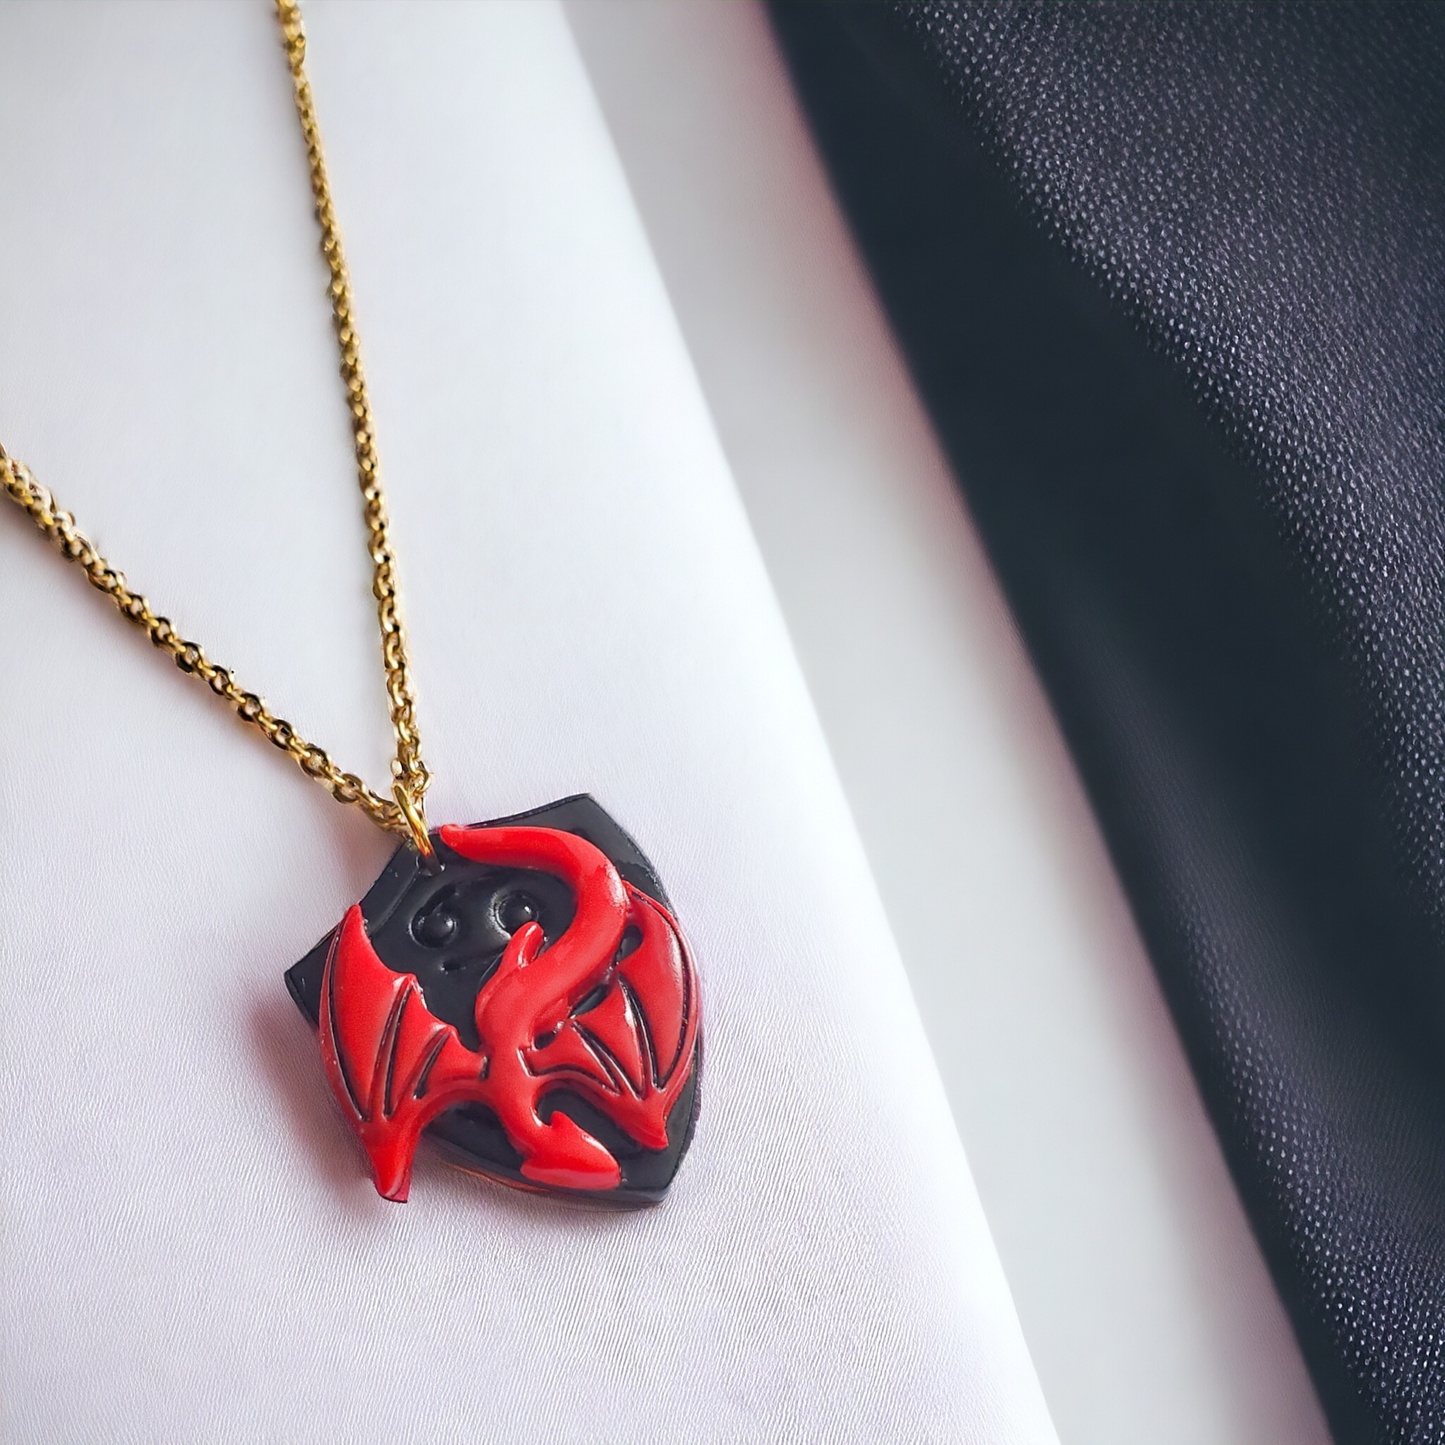 Cancer Zodiac Dragon Necklace with Shield